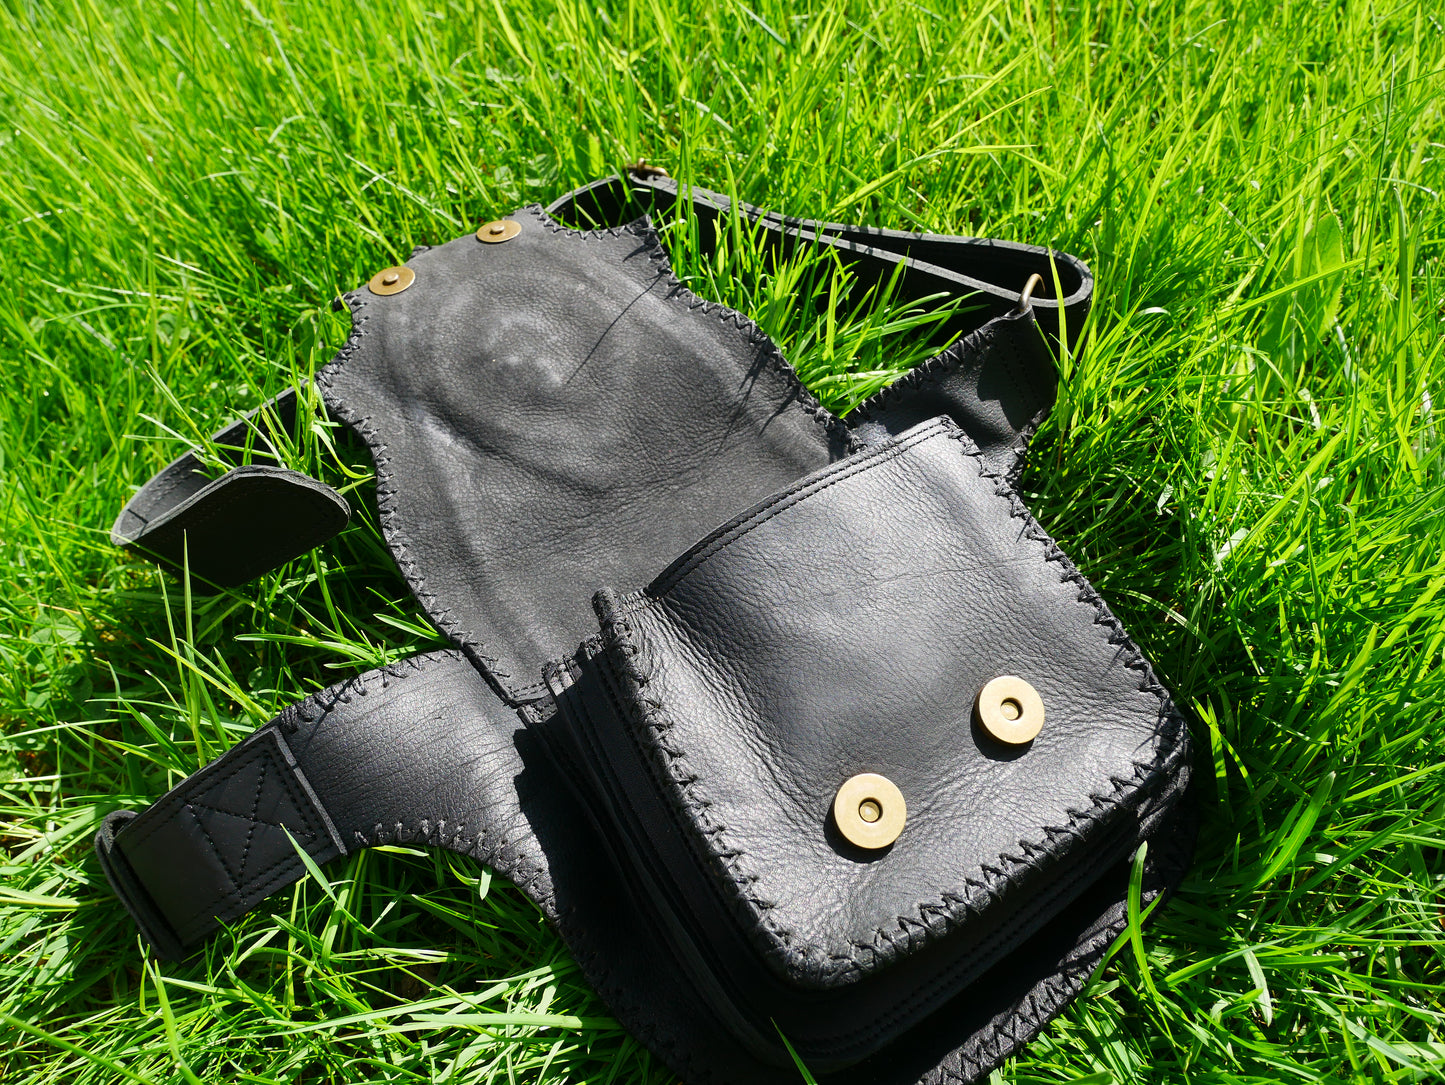 Handmade leather hip bag - waist bag with real gem stone and hook closure